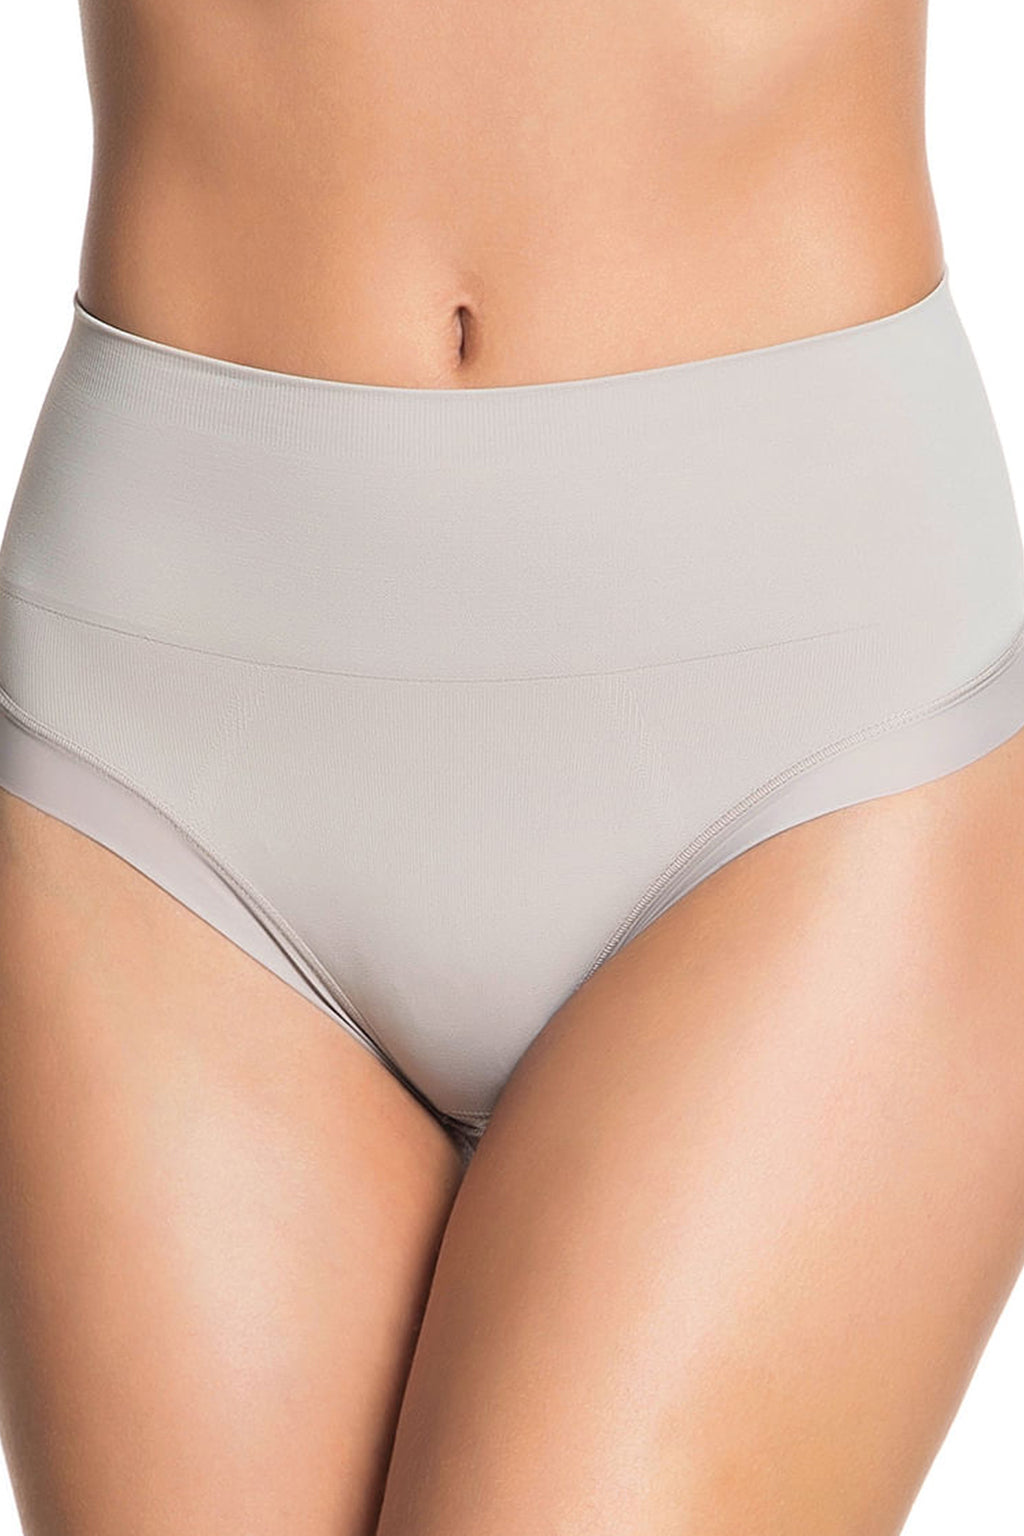 G-String Underpants Thong Shapewear Tummy Control